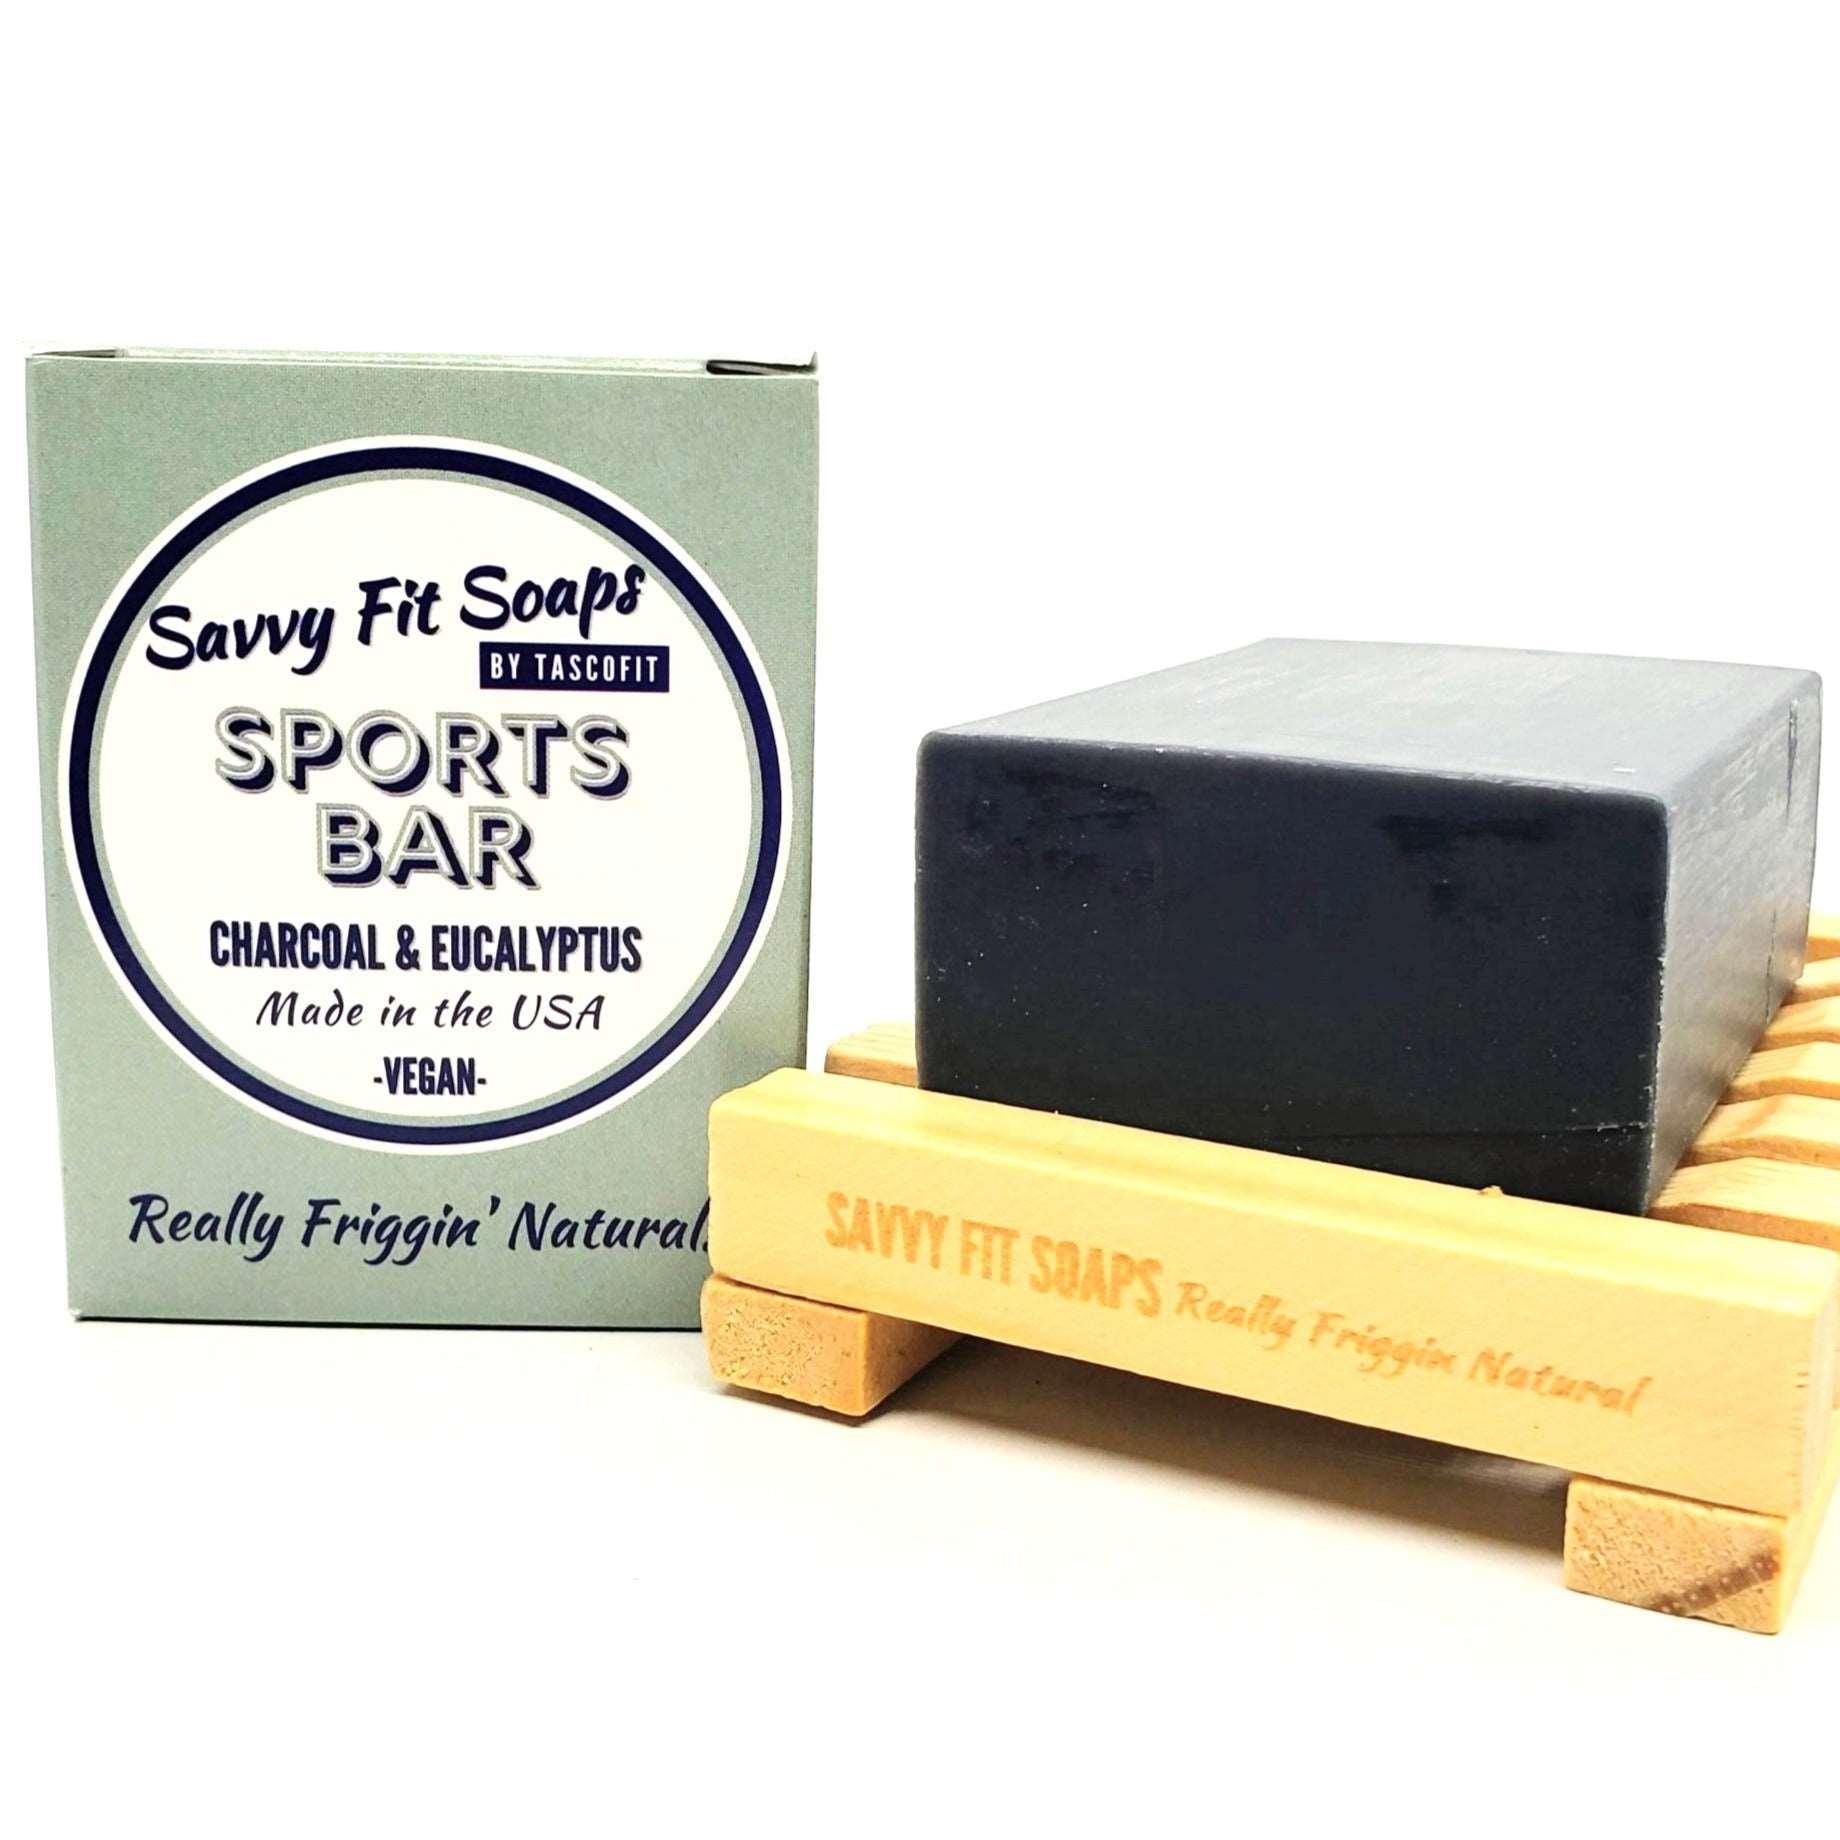 Savvy Fit Soaps Sports Bar Natural Vegan Bar Soap, Size: 3 Length x 2.4 Width x 1.4 Height, Black